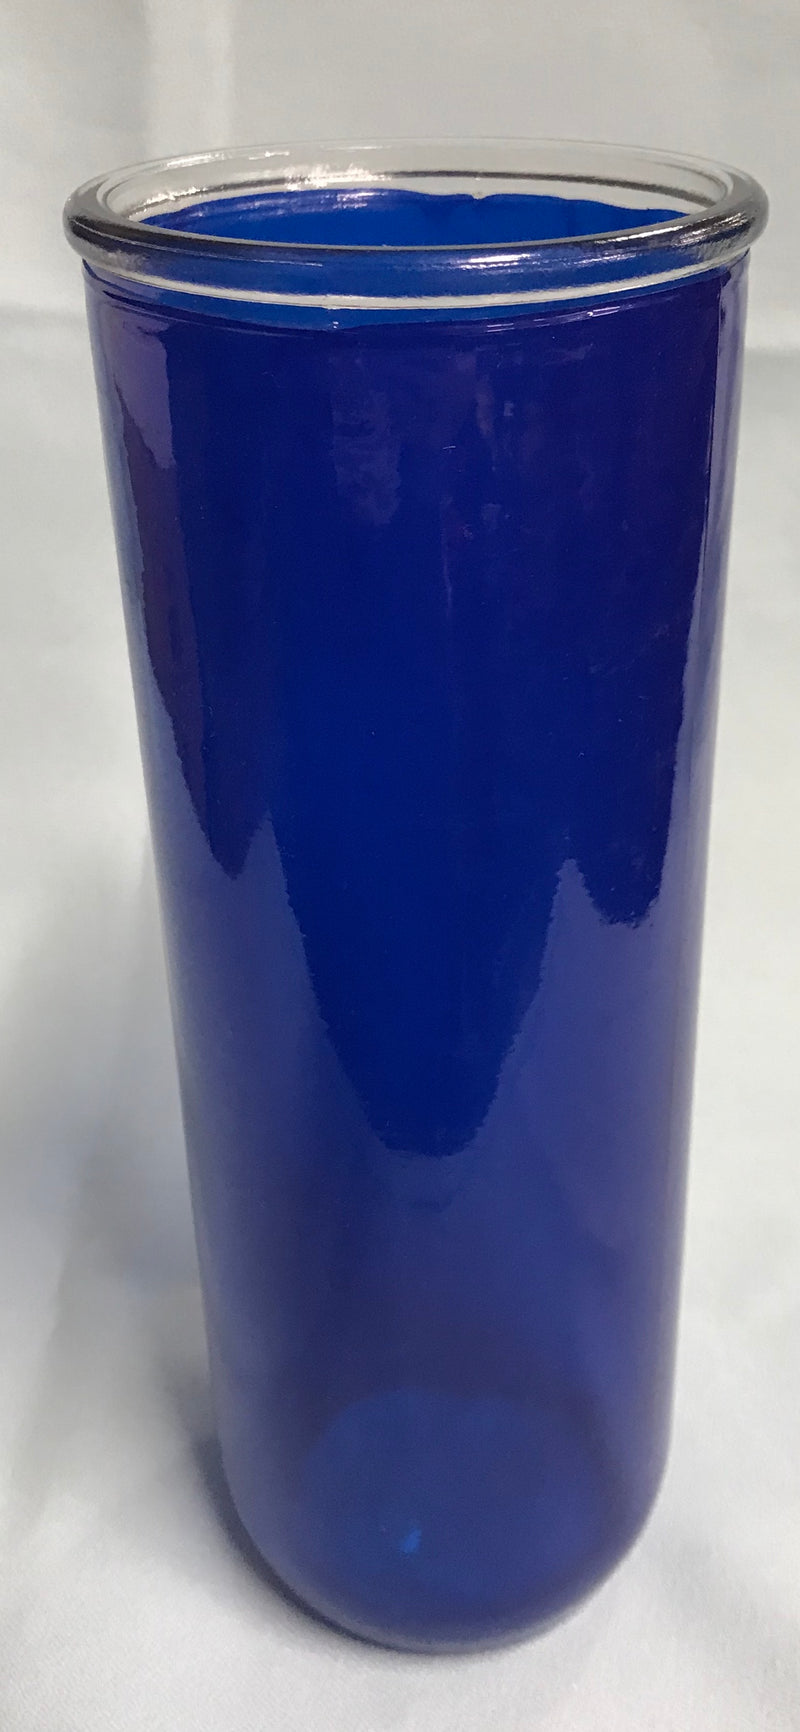 7-DAY GLASS BLUE HOLDER